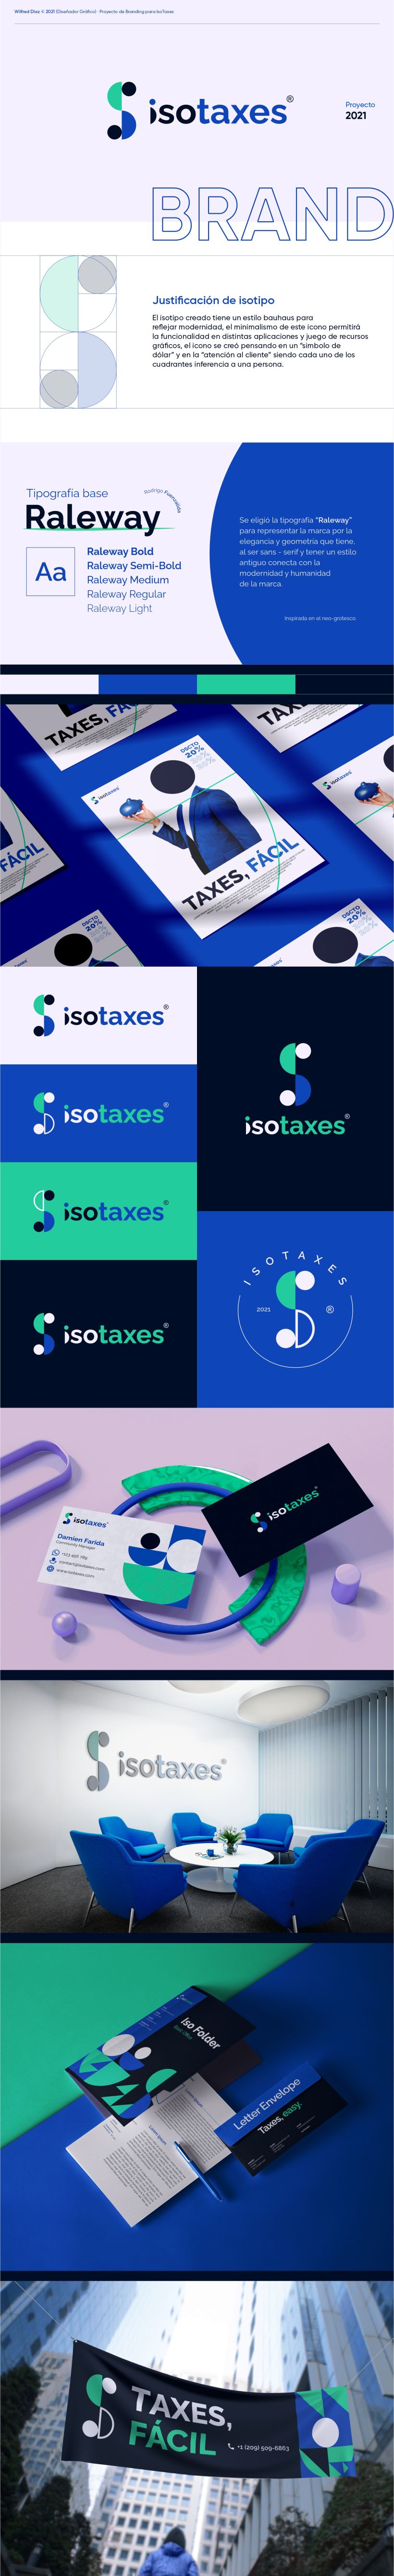 Branding Isotaxes 2